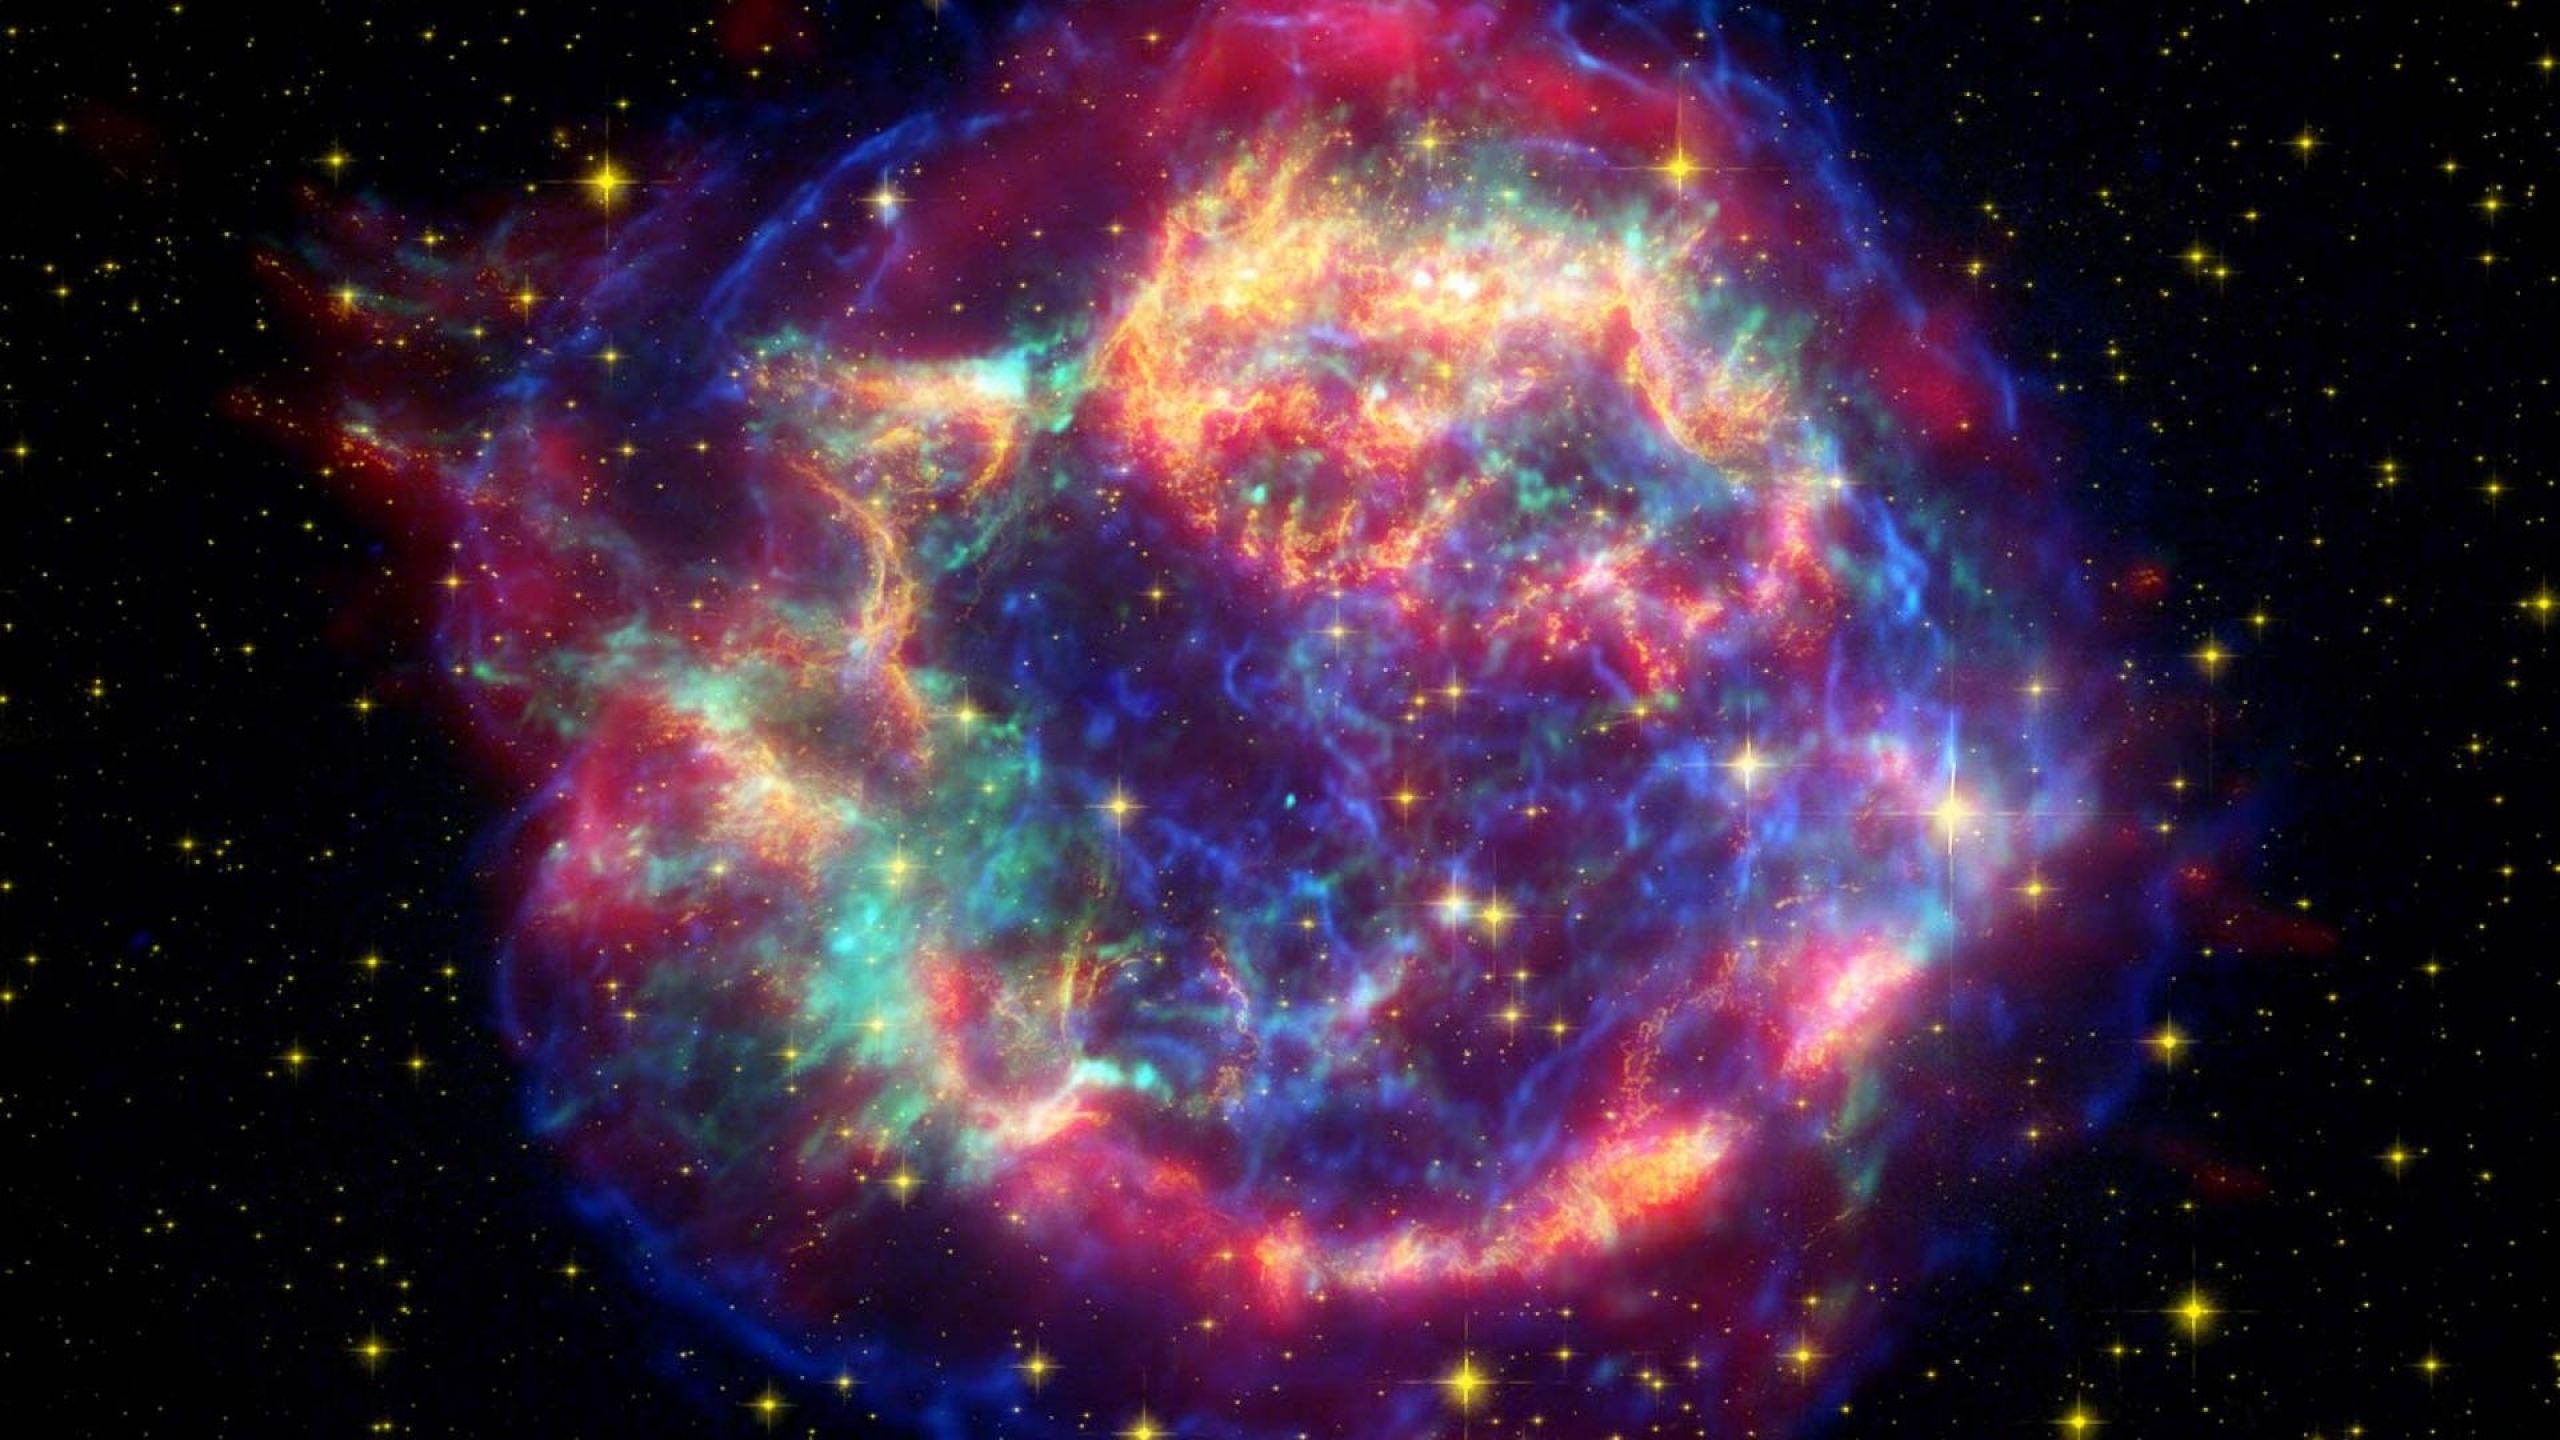 Supernova HD Wallpaper and Background Image